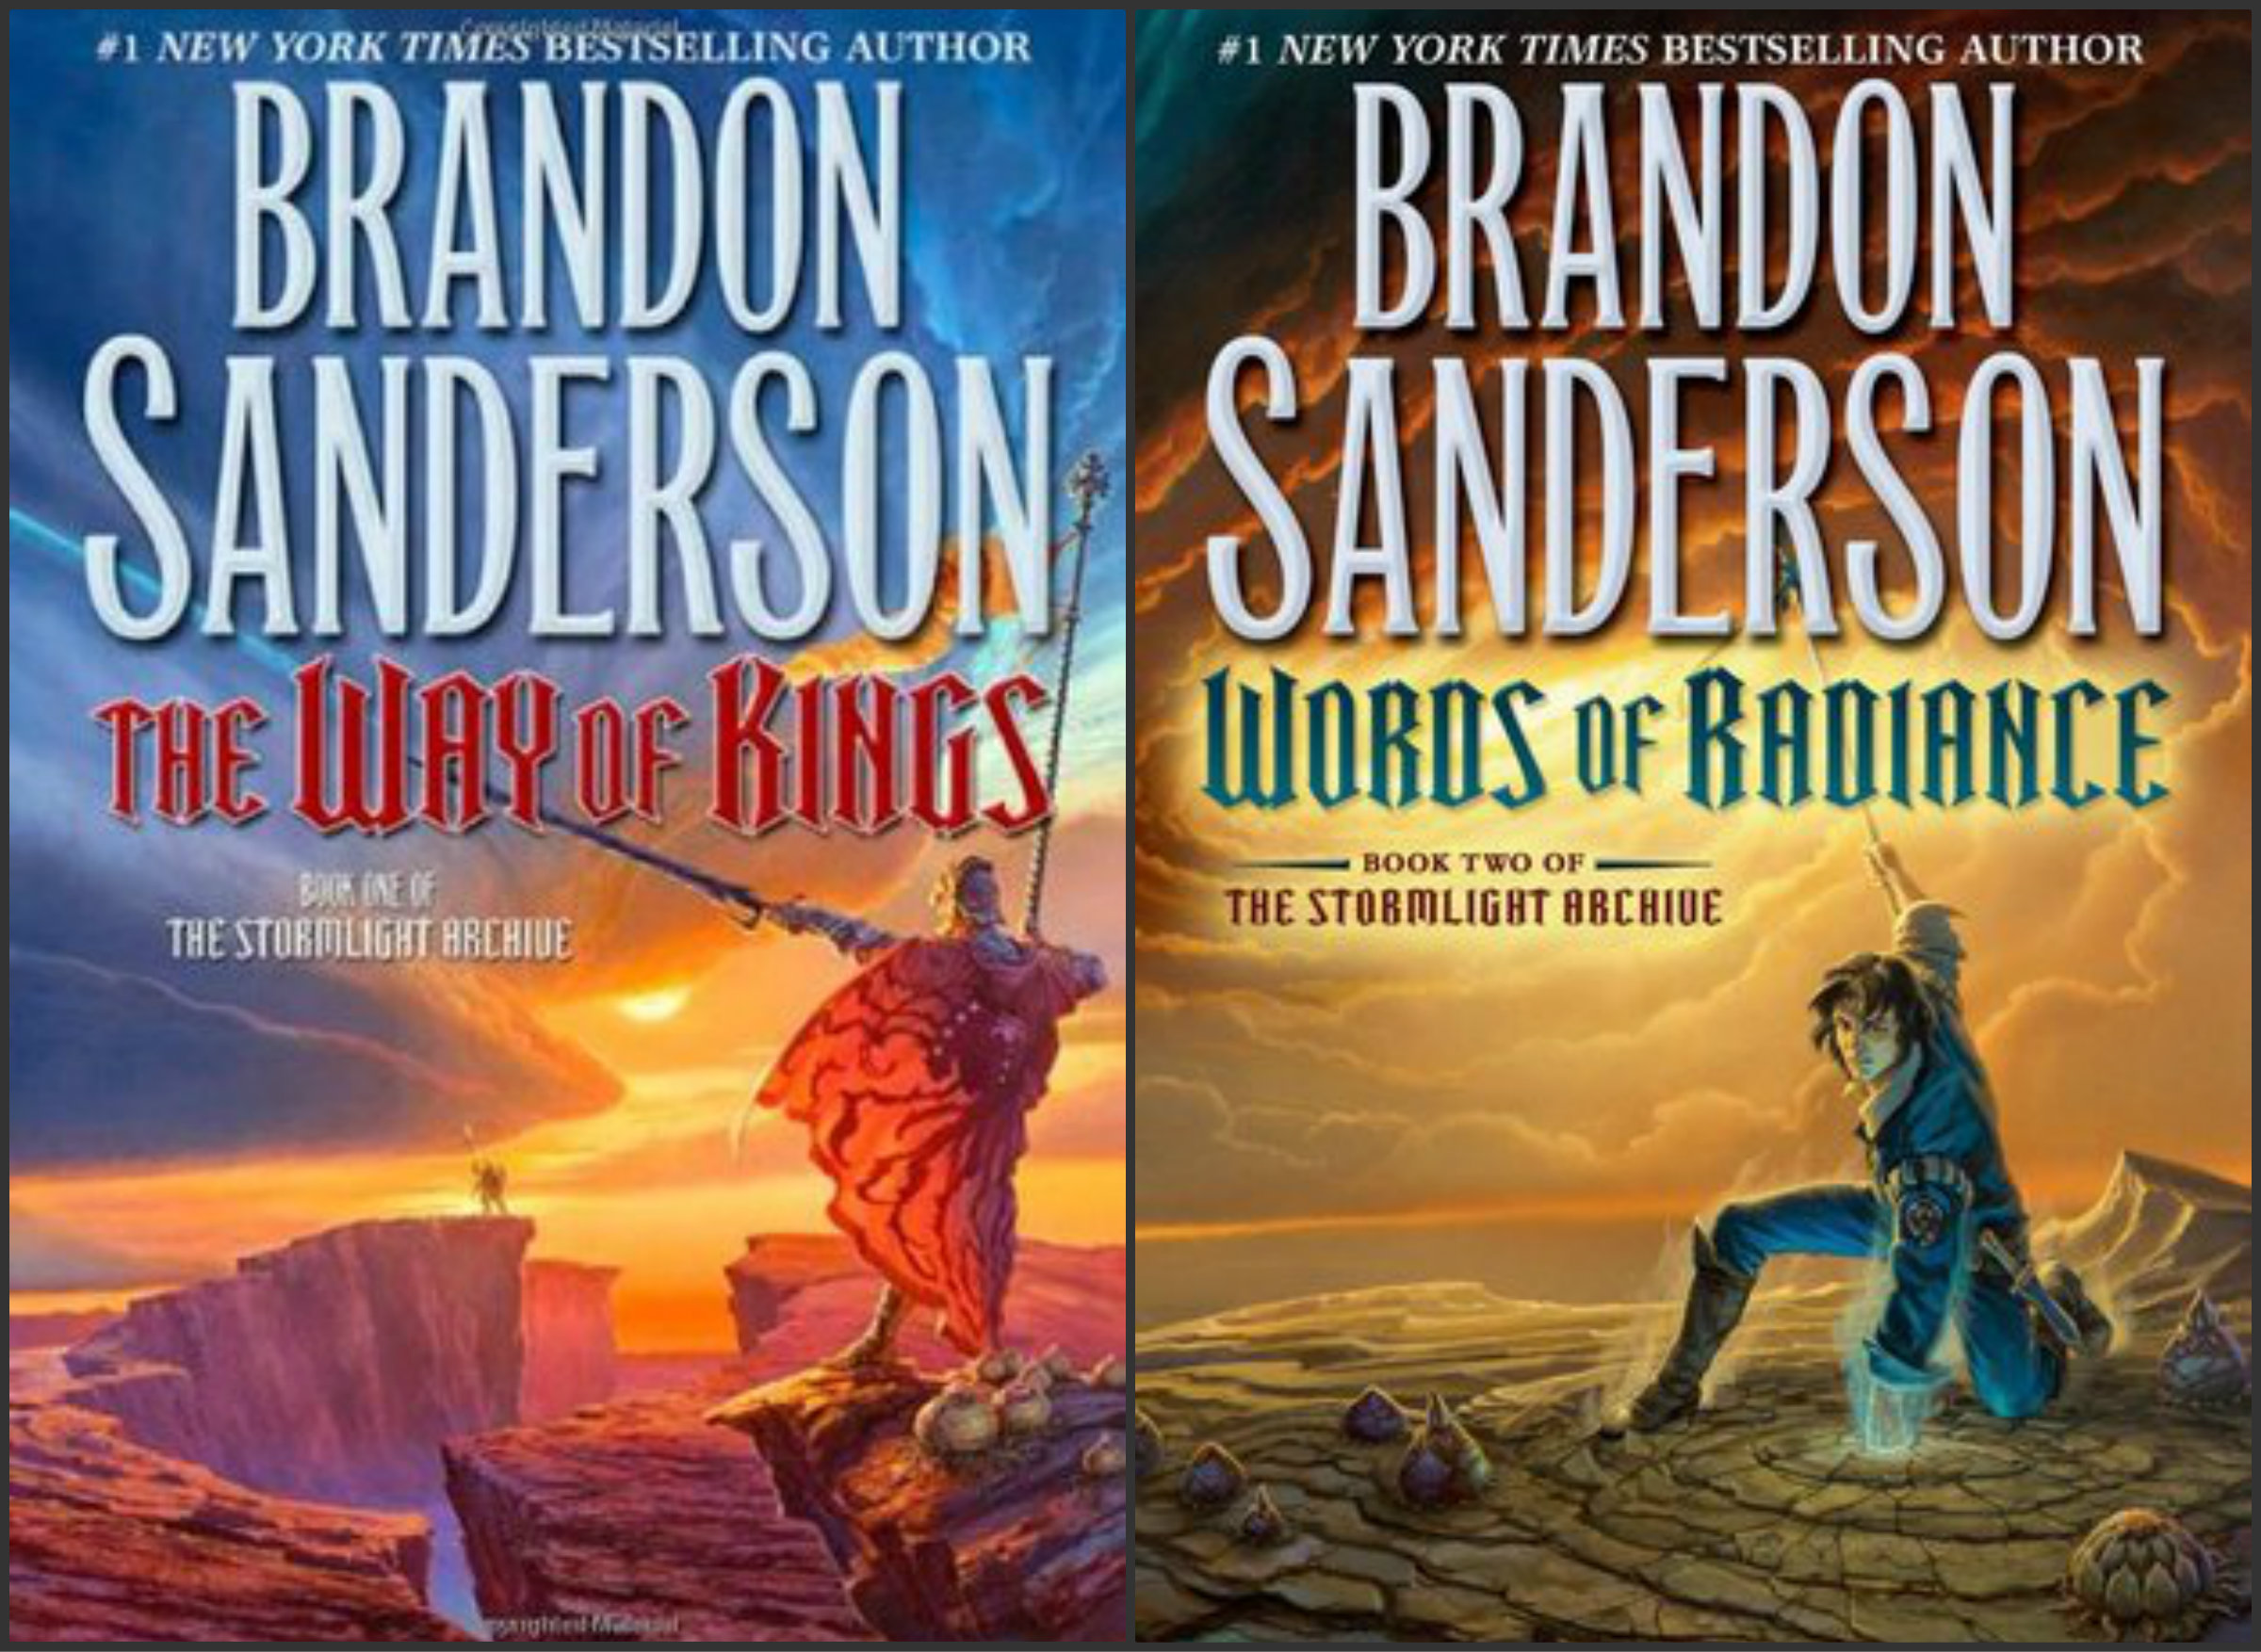 what are the best brandon sanderson books